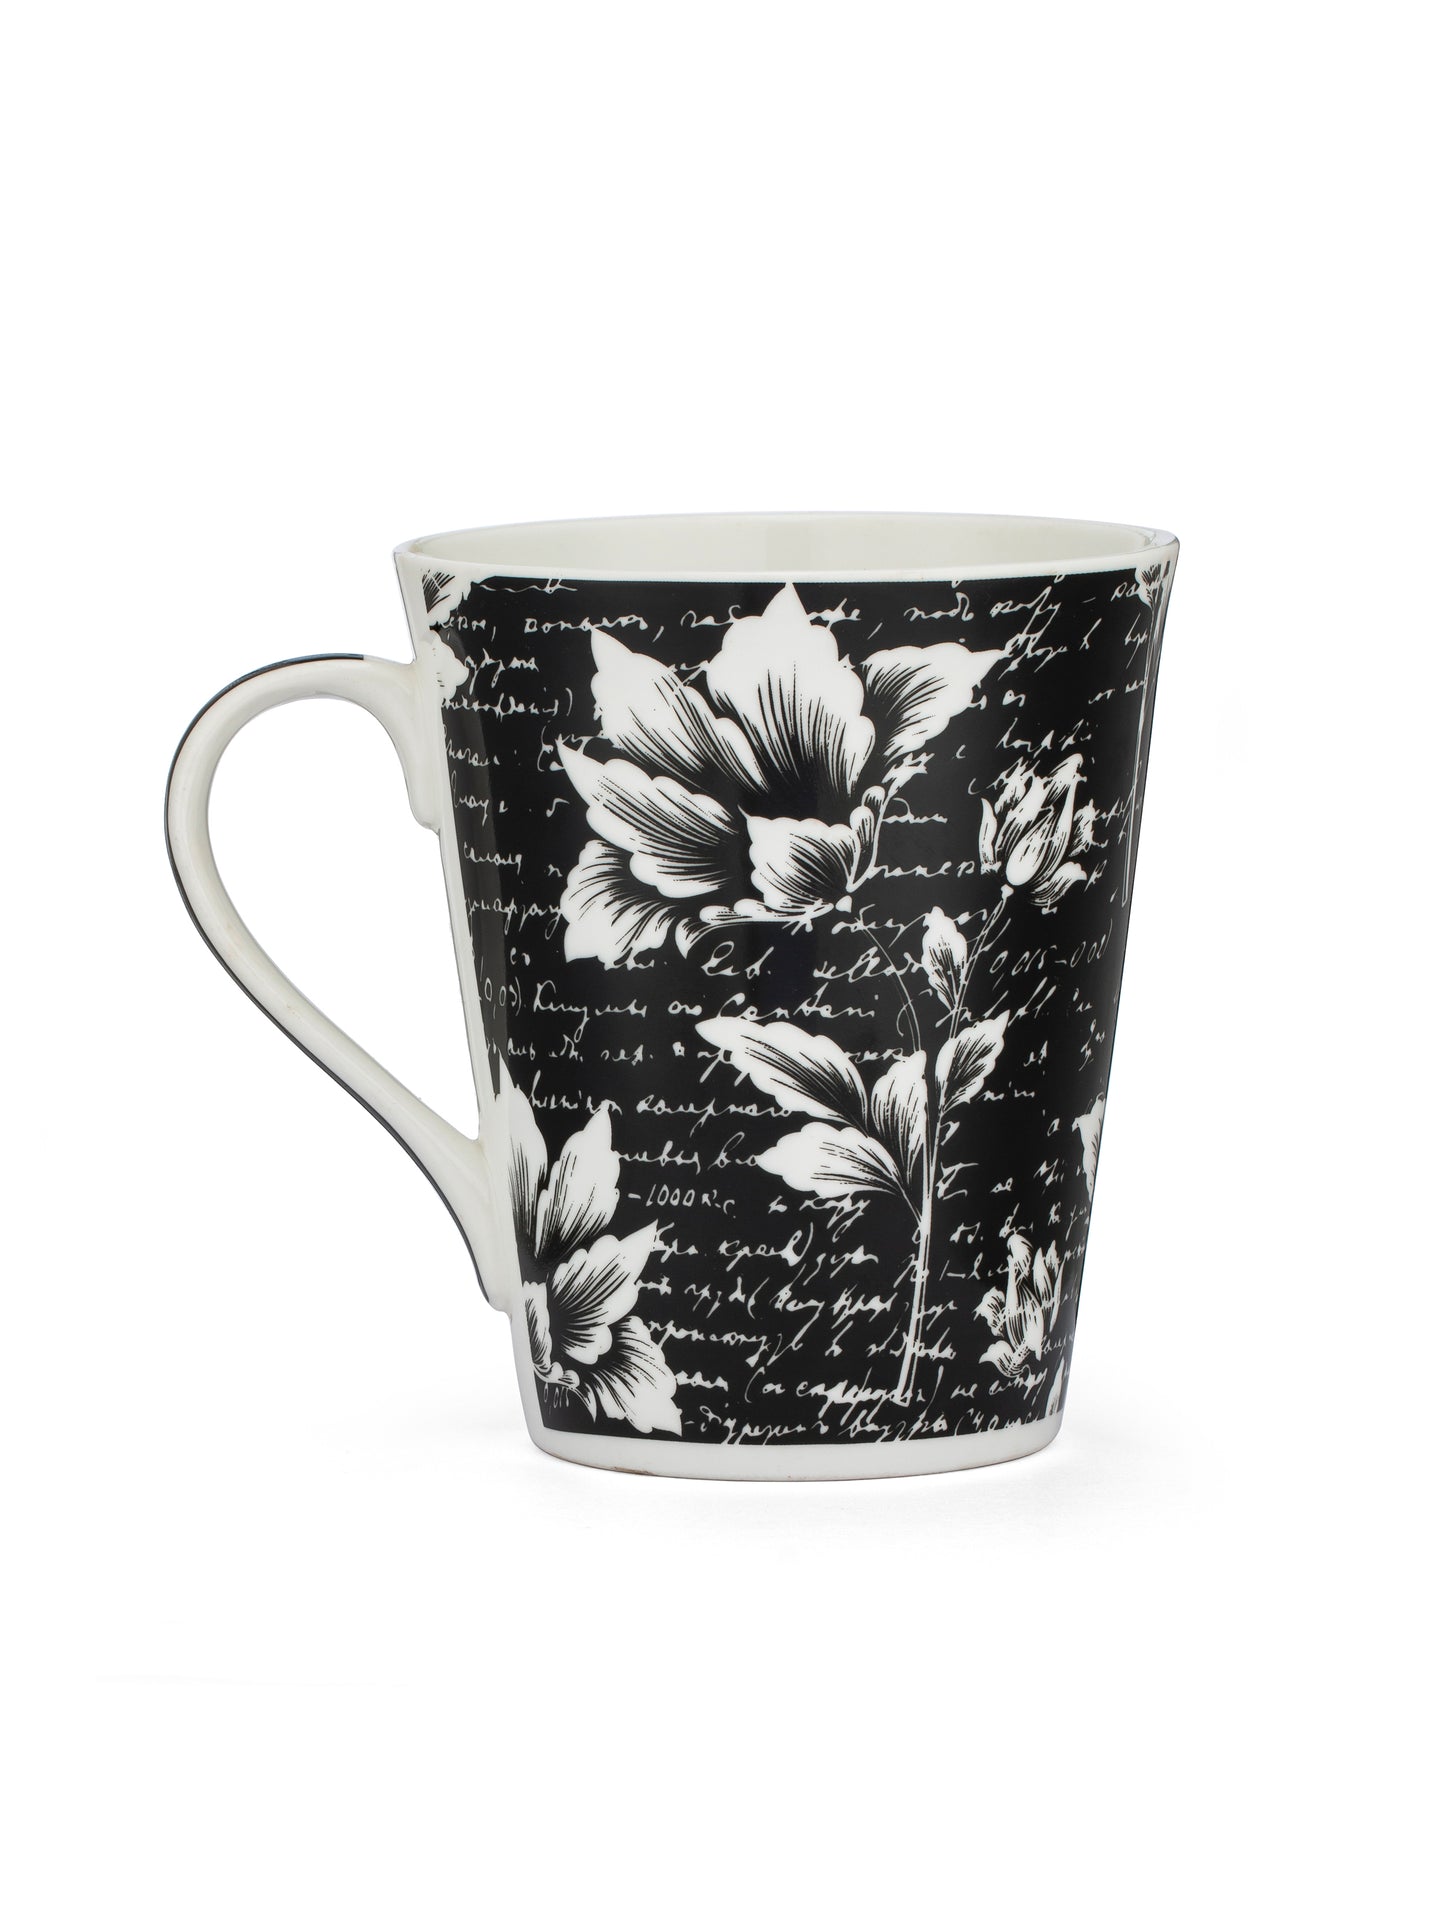 Ceramic Black & White Monochrome Mug and Bowl Snack Set (2 Mugs + 1 Bowl) (MC716)